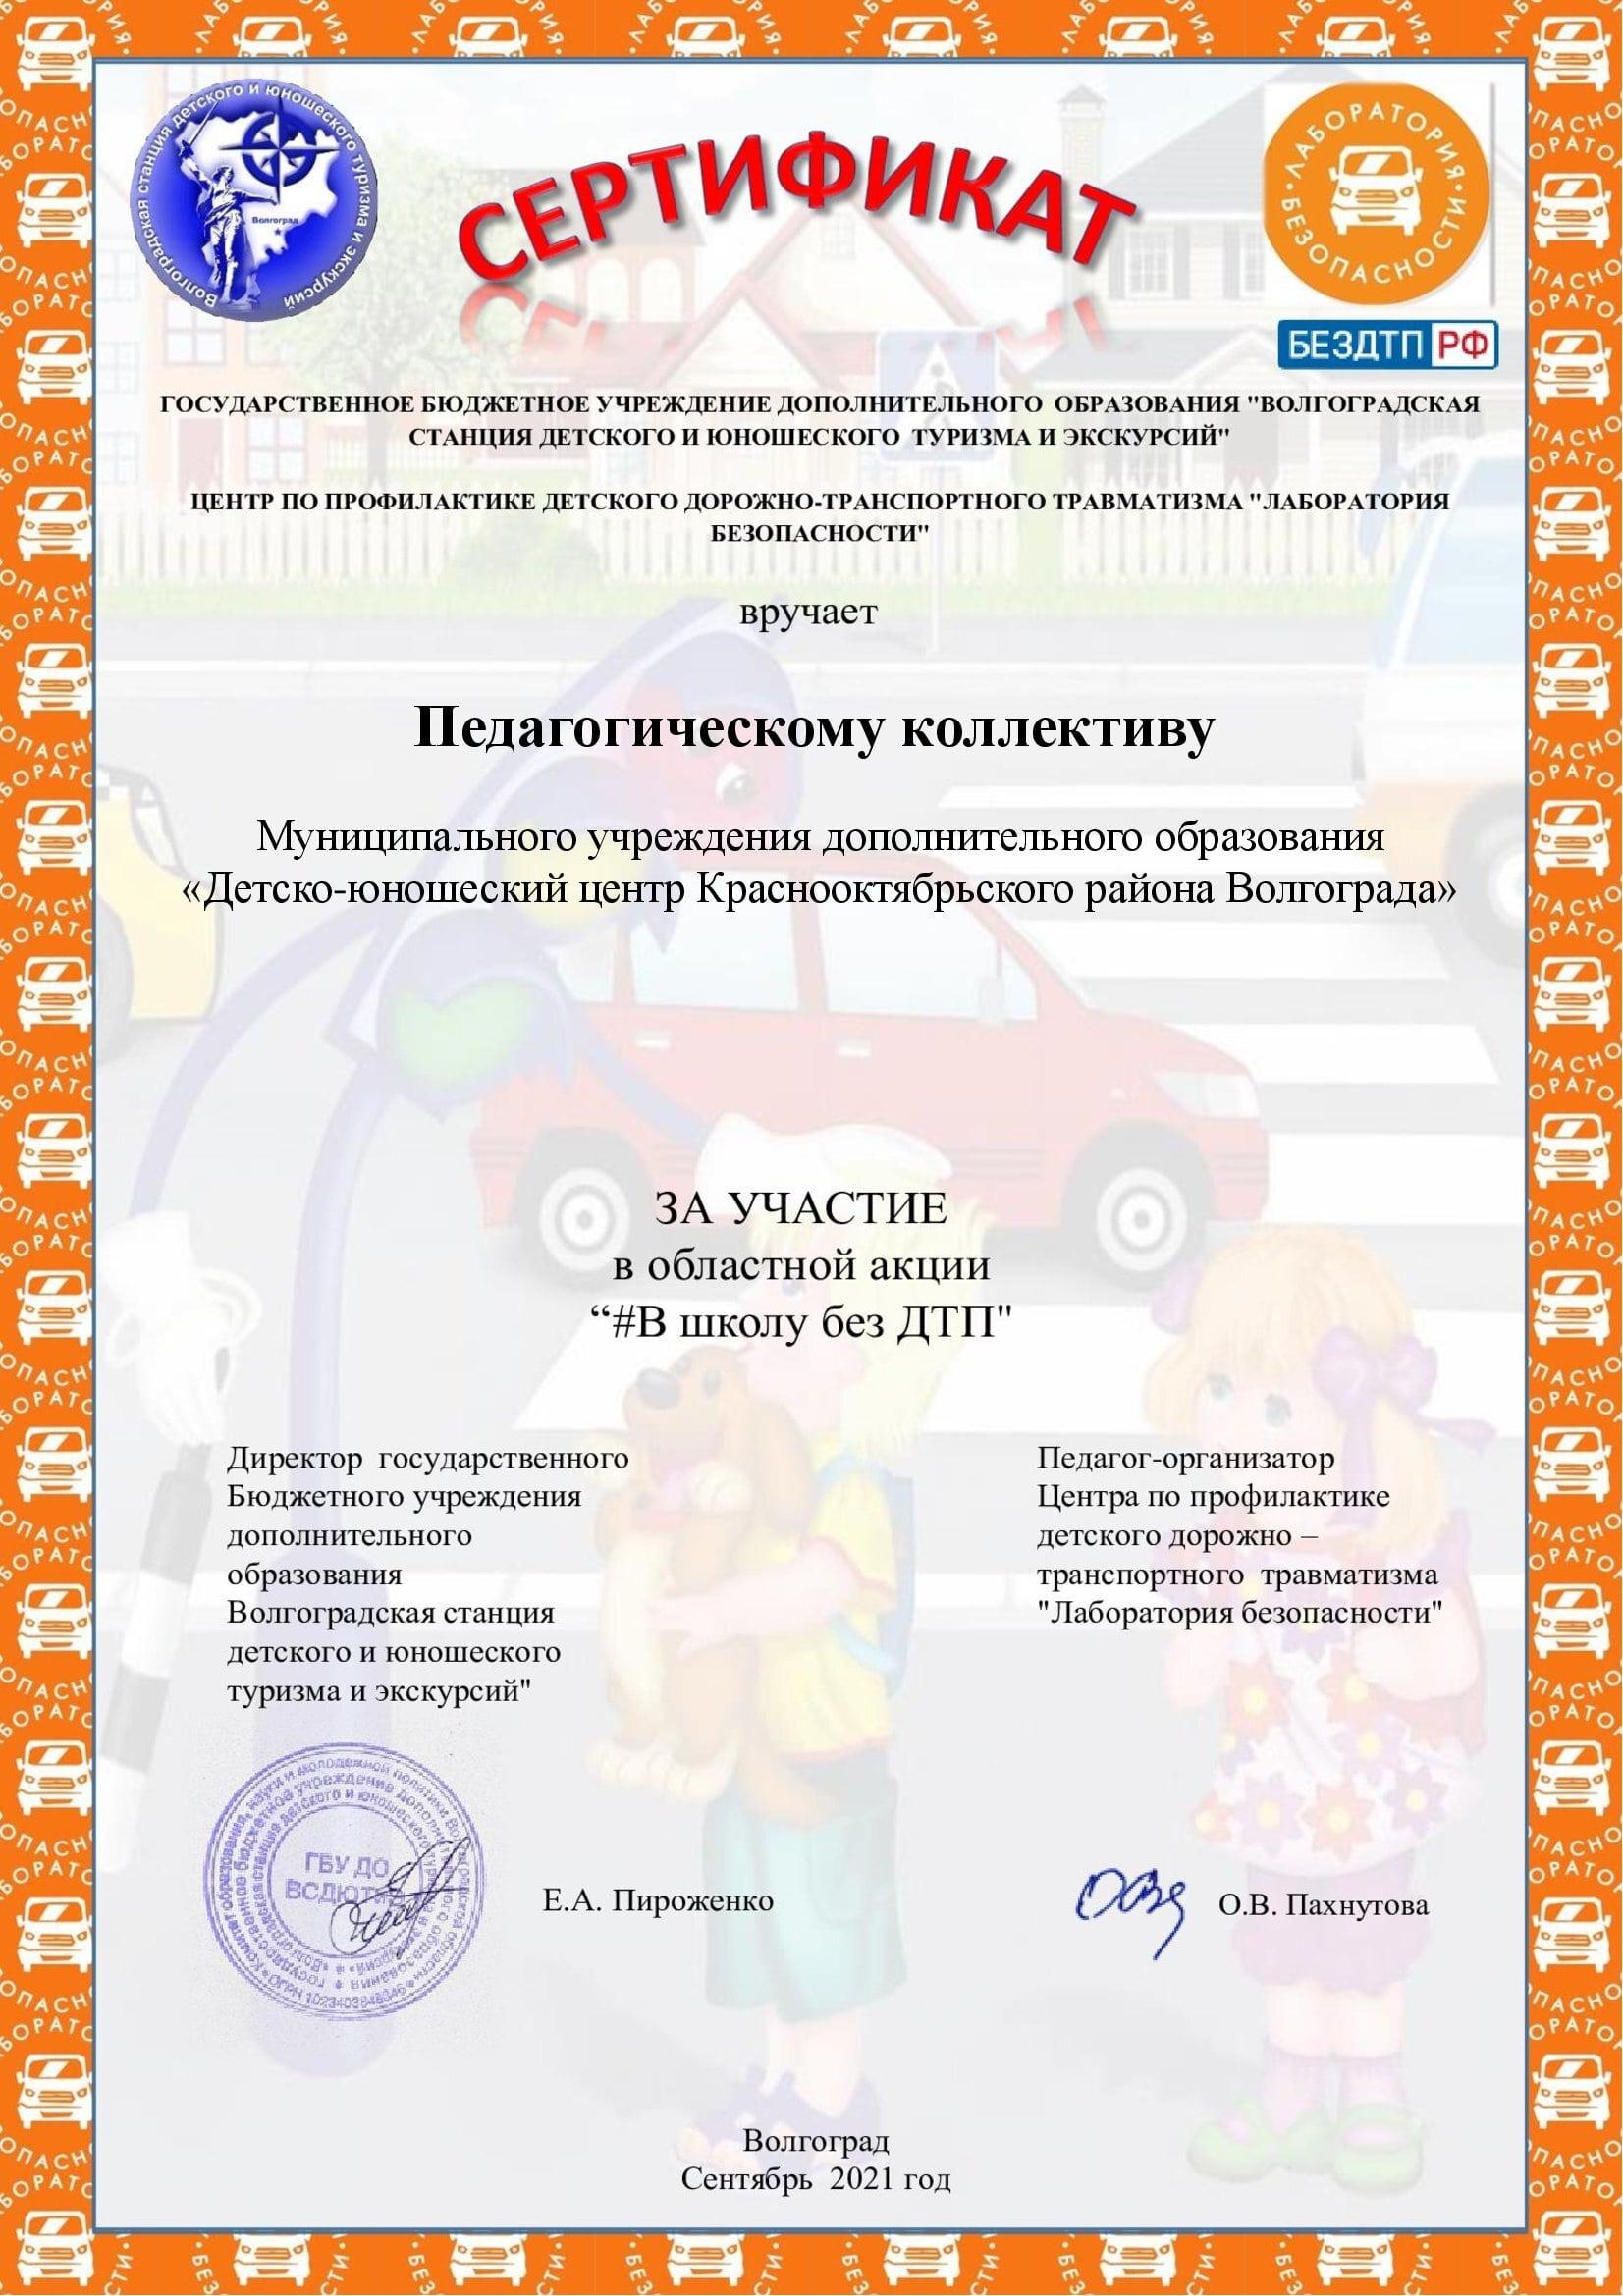 Сертификат МОУ ДЮЦ.jpg